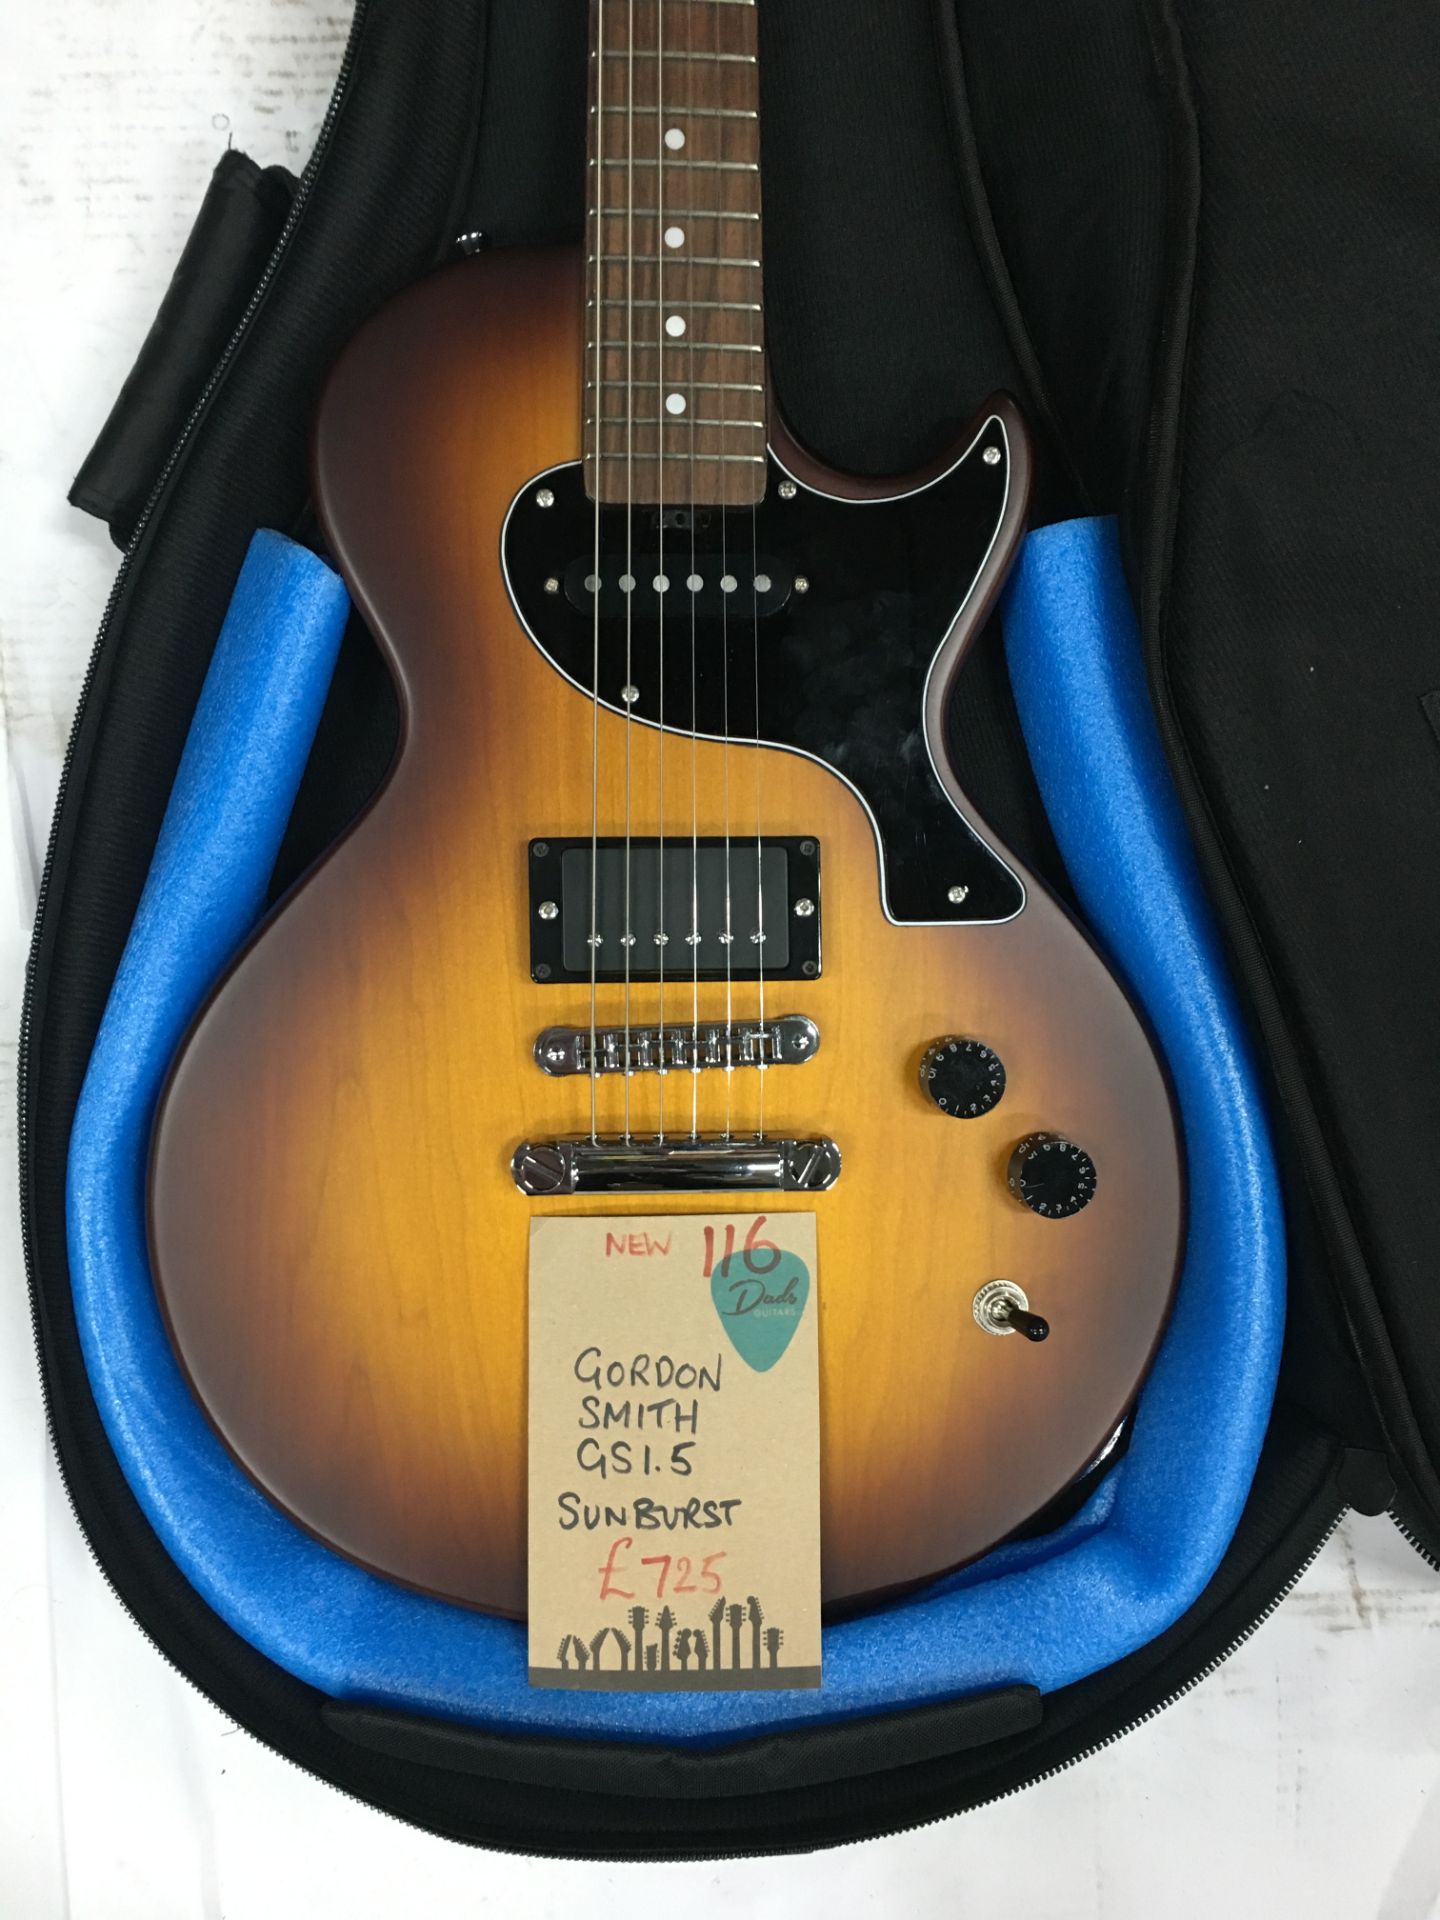 Gordon Smith GS1.5 Electric Guitar in Tobacco Sunburst | RRP £725 - Image 3 of 4